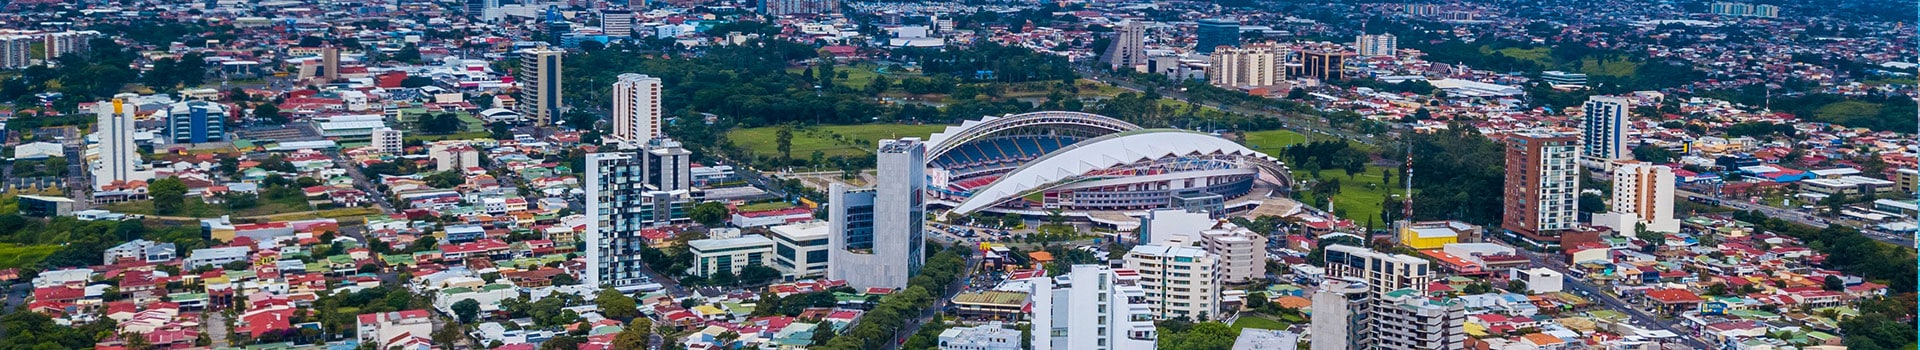 Panama city - San josé